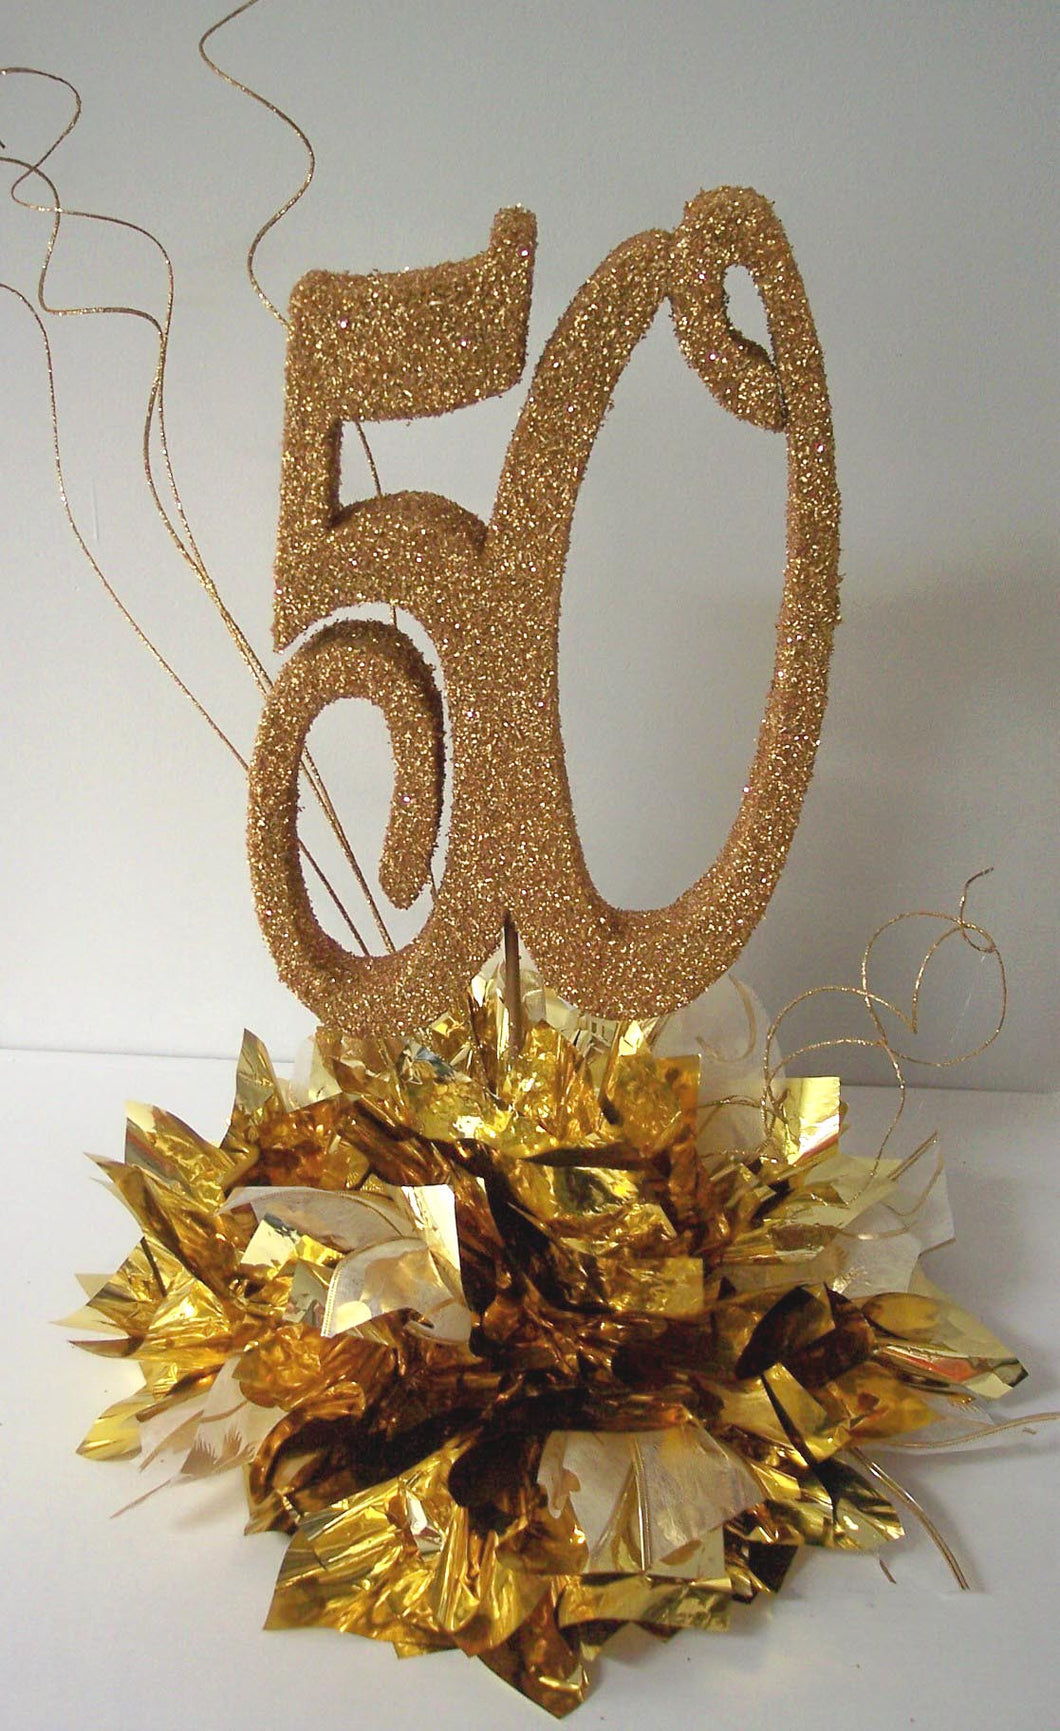 50th anniversary centerpiece on metallic tissue base - Designs by Ginny